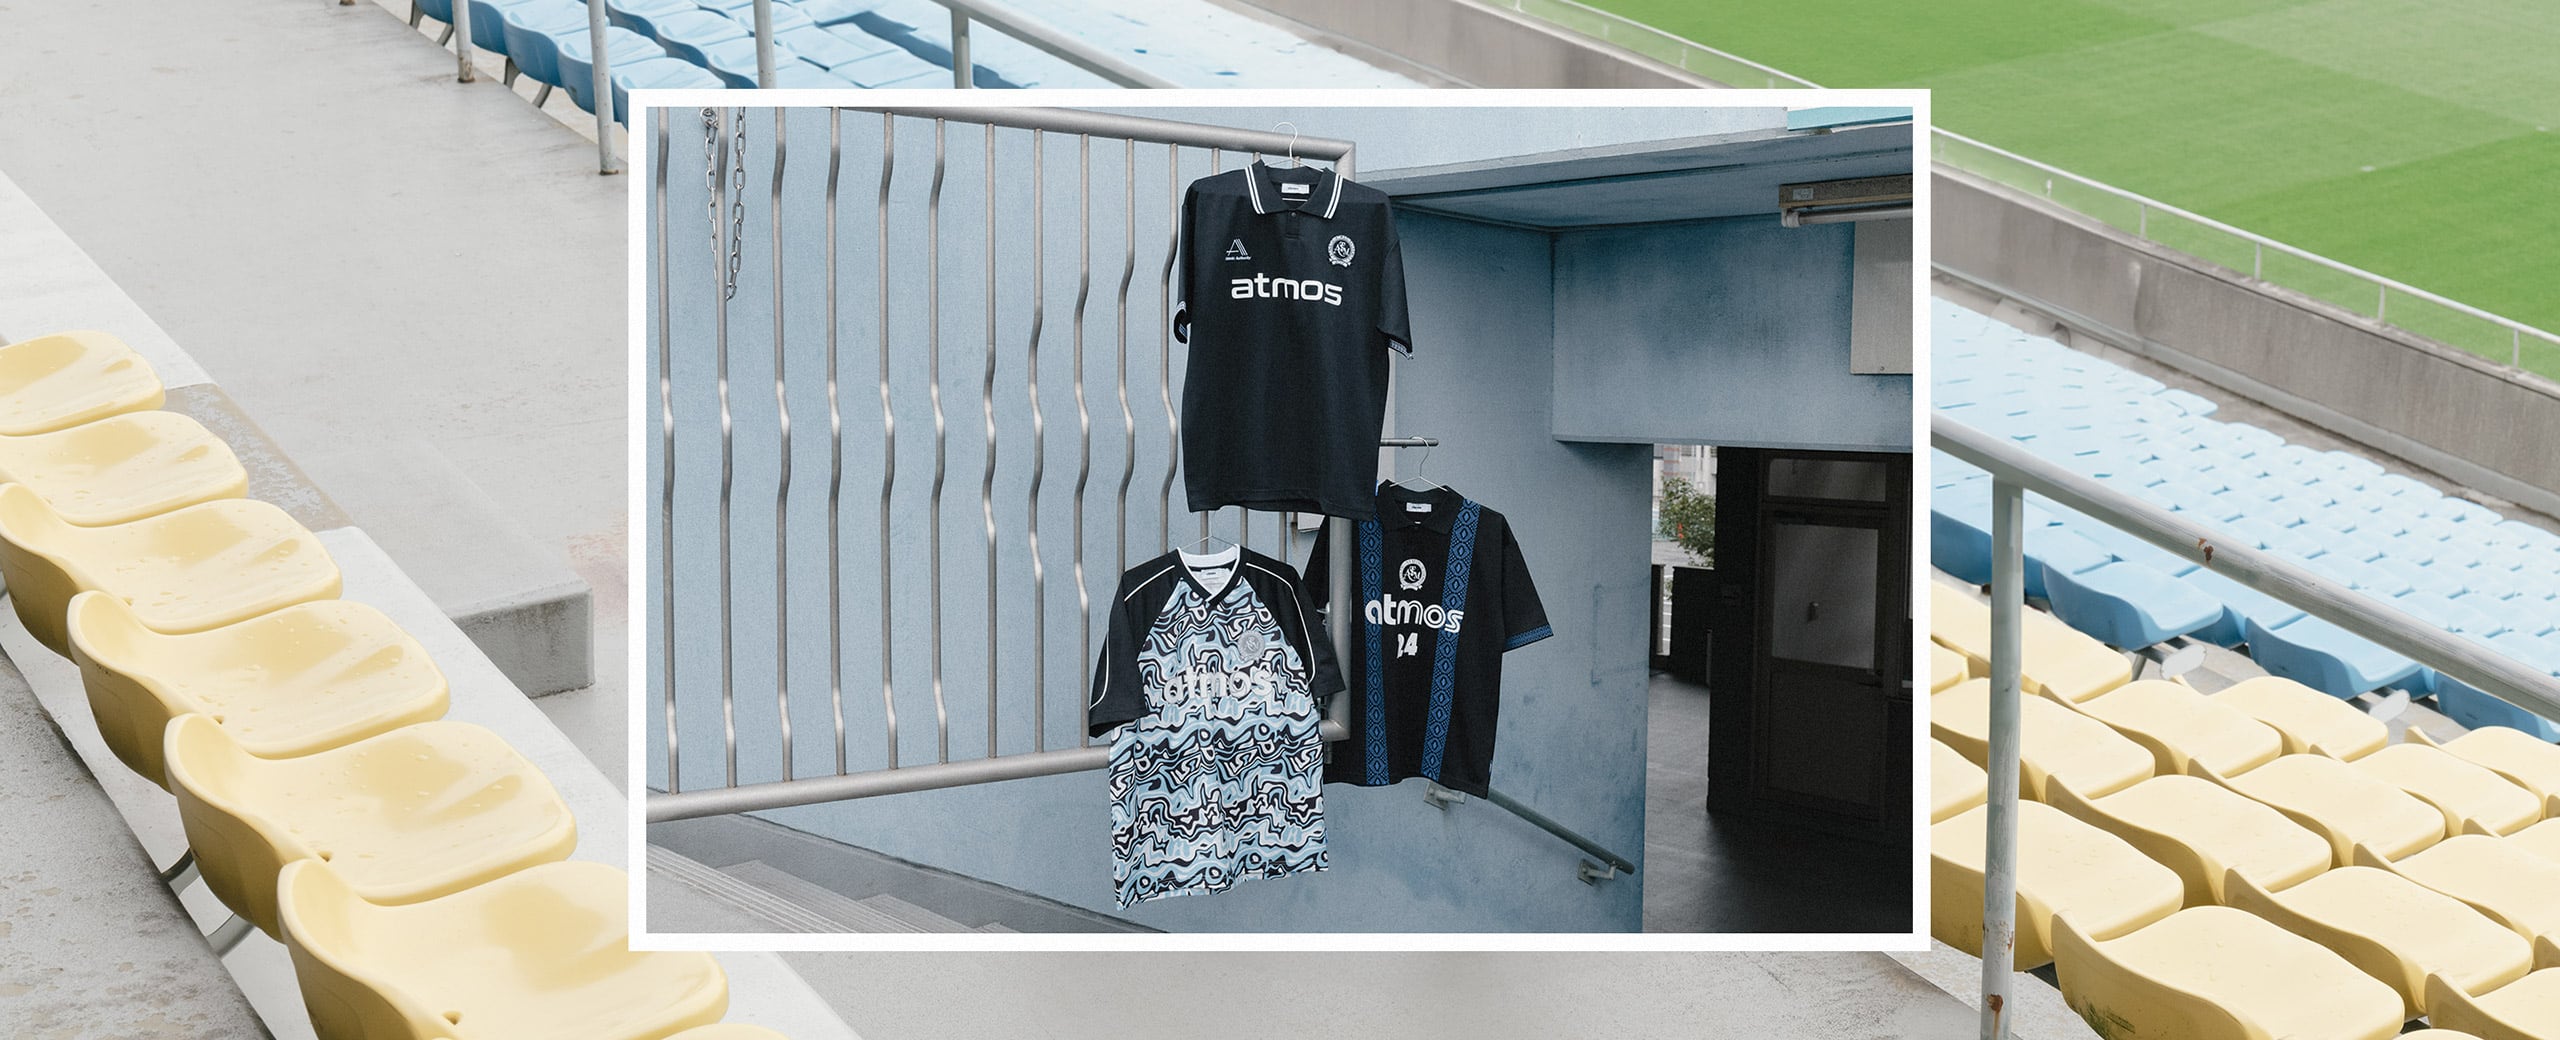 "atmos Soccer Jersey Collection | オリジナルパターンでデザインした、トレンドのサッカージャージが登場。"